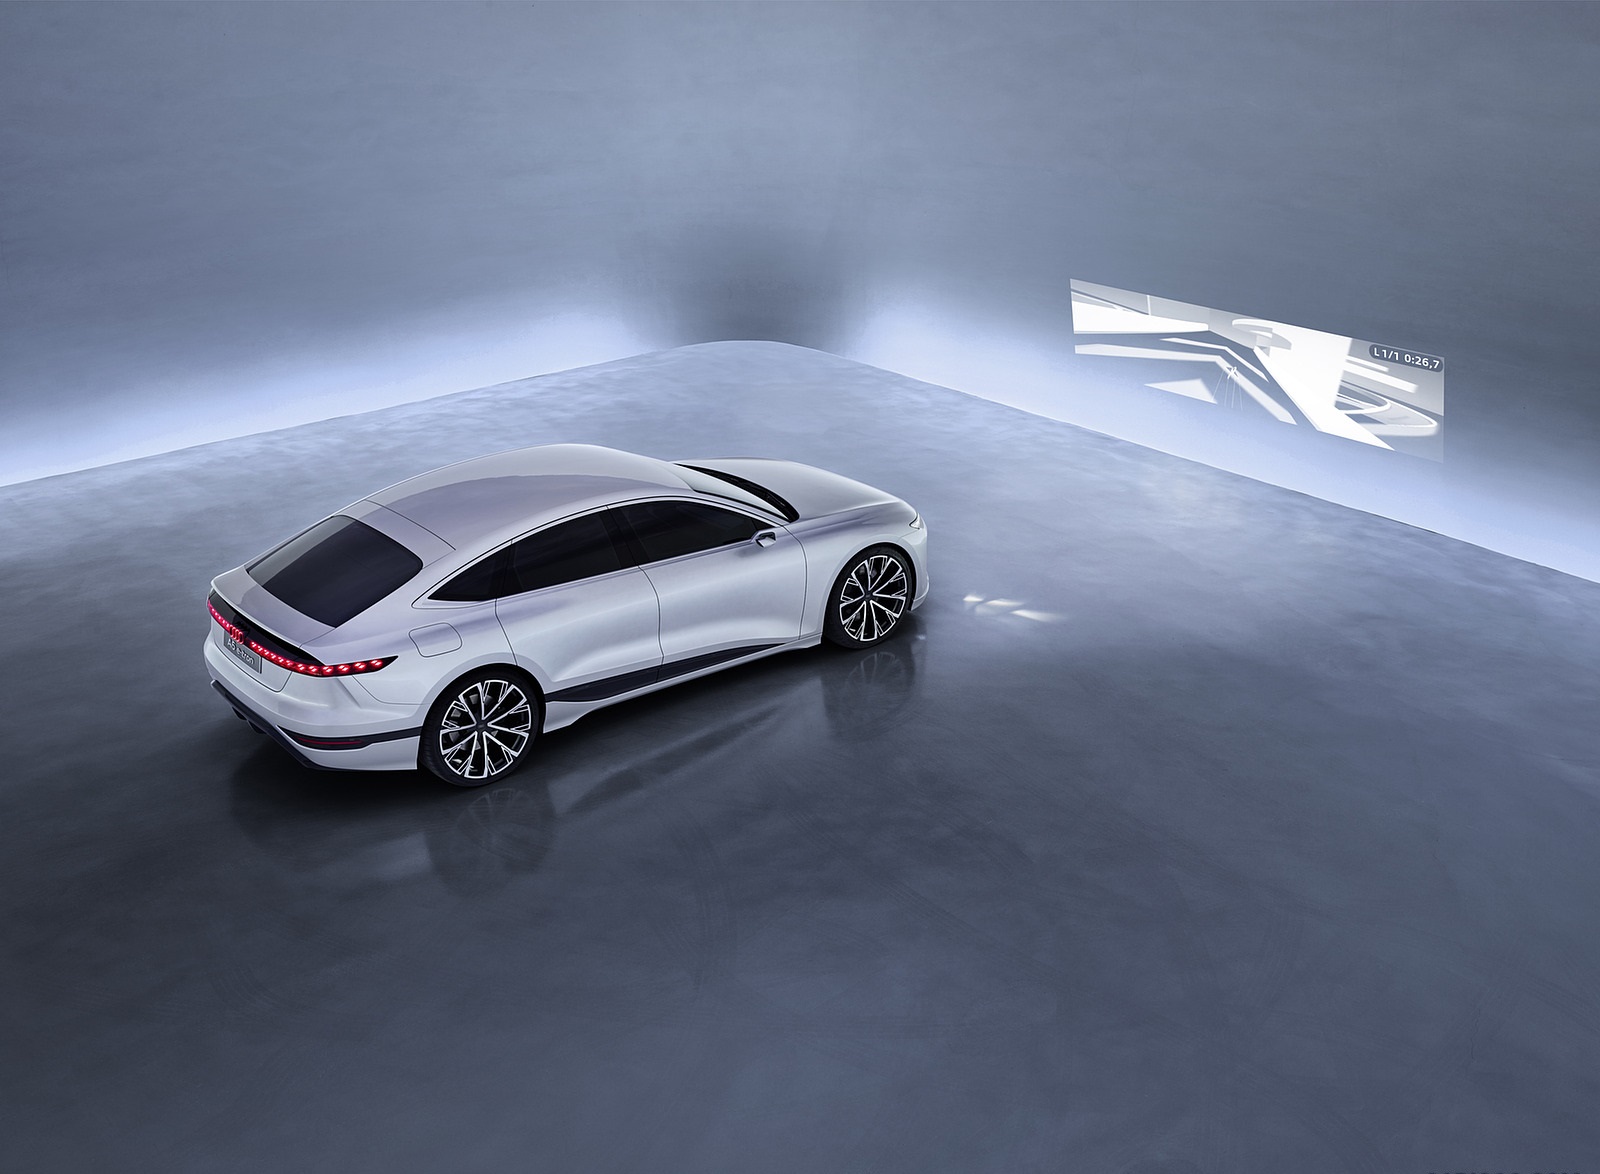 2021 Audi A6 e-tron Concept (Color: Helio Silver) Rear Three-Quarter Wallpapers  #33 of 54